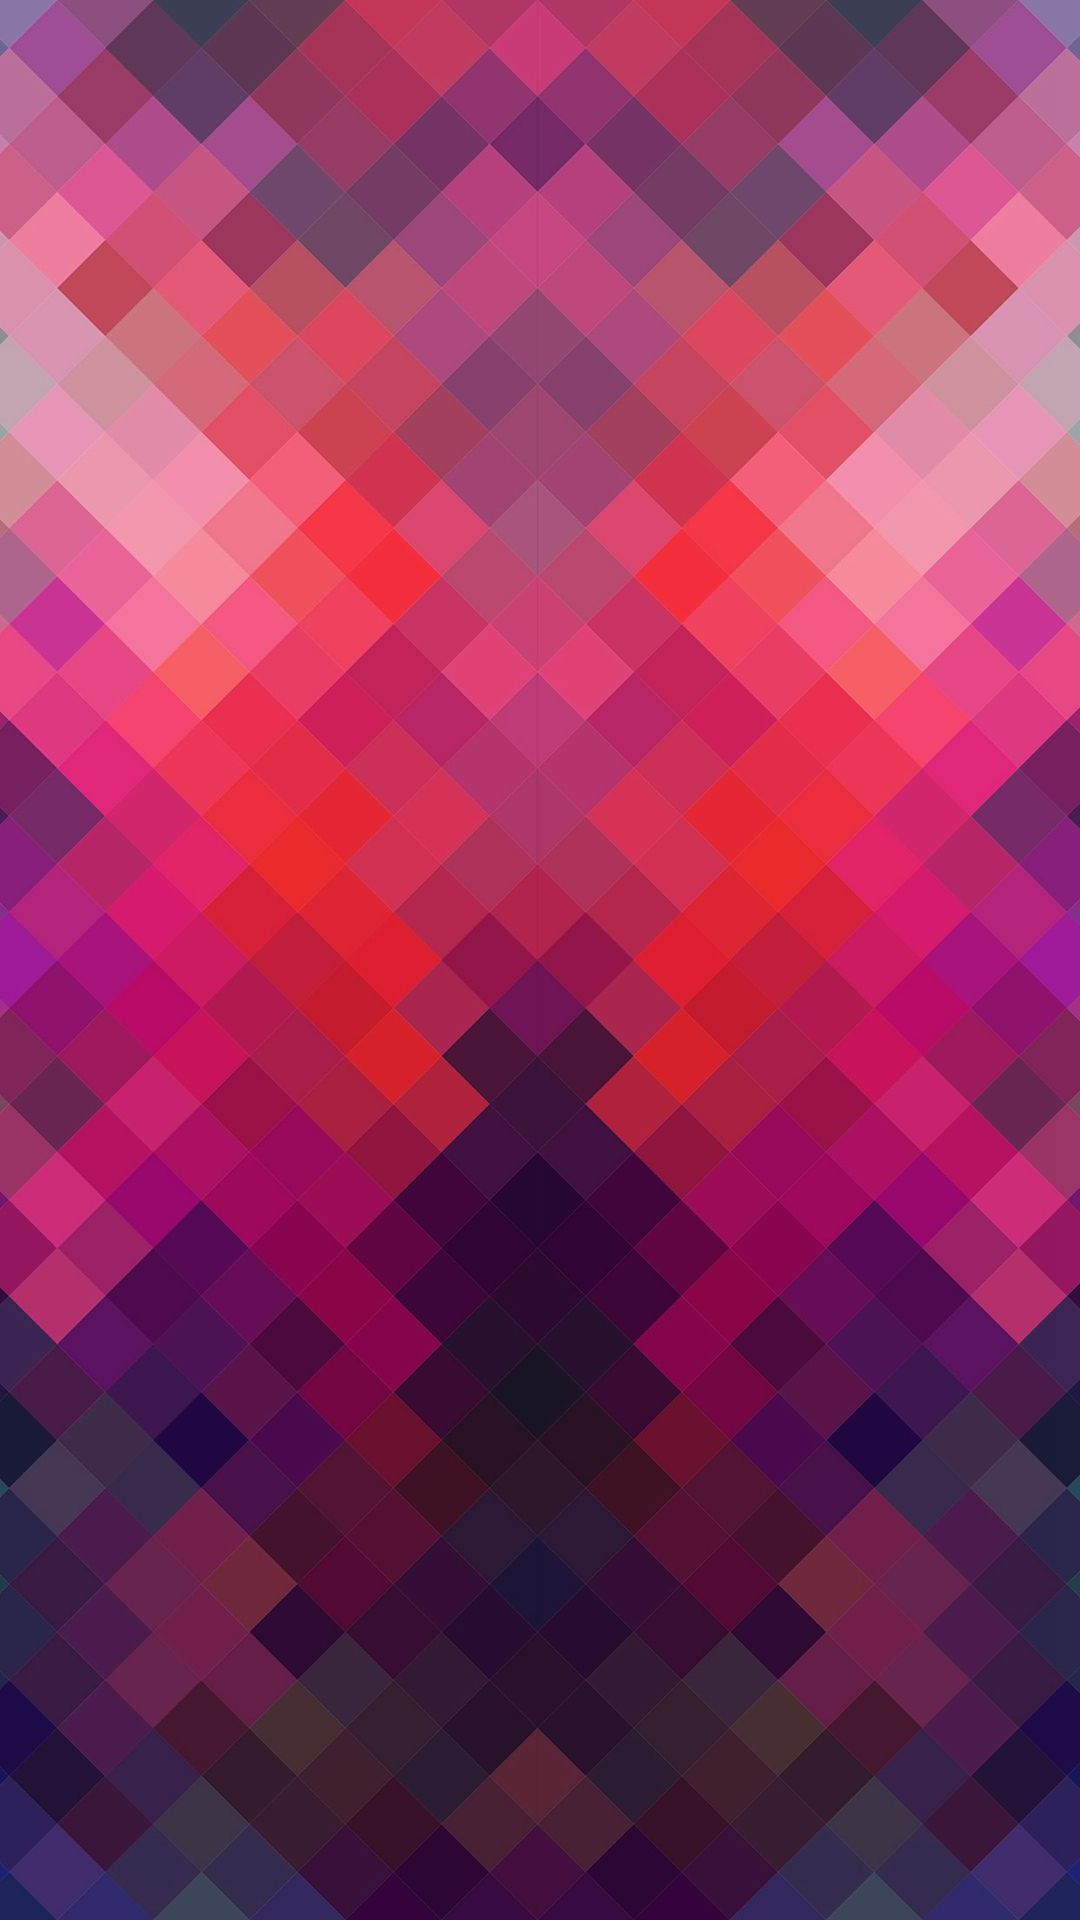 Best Geometric iPhone 8 Wallpaper HD [2020]